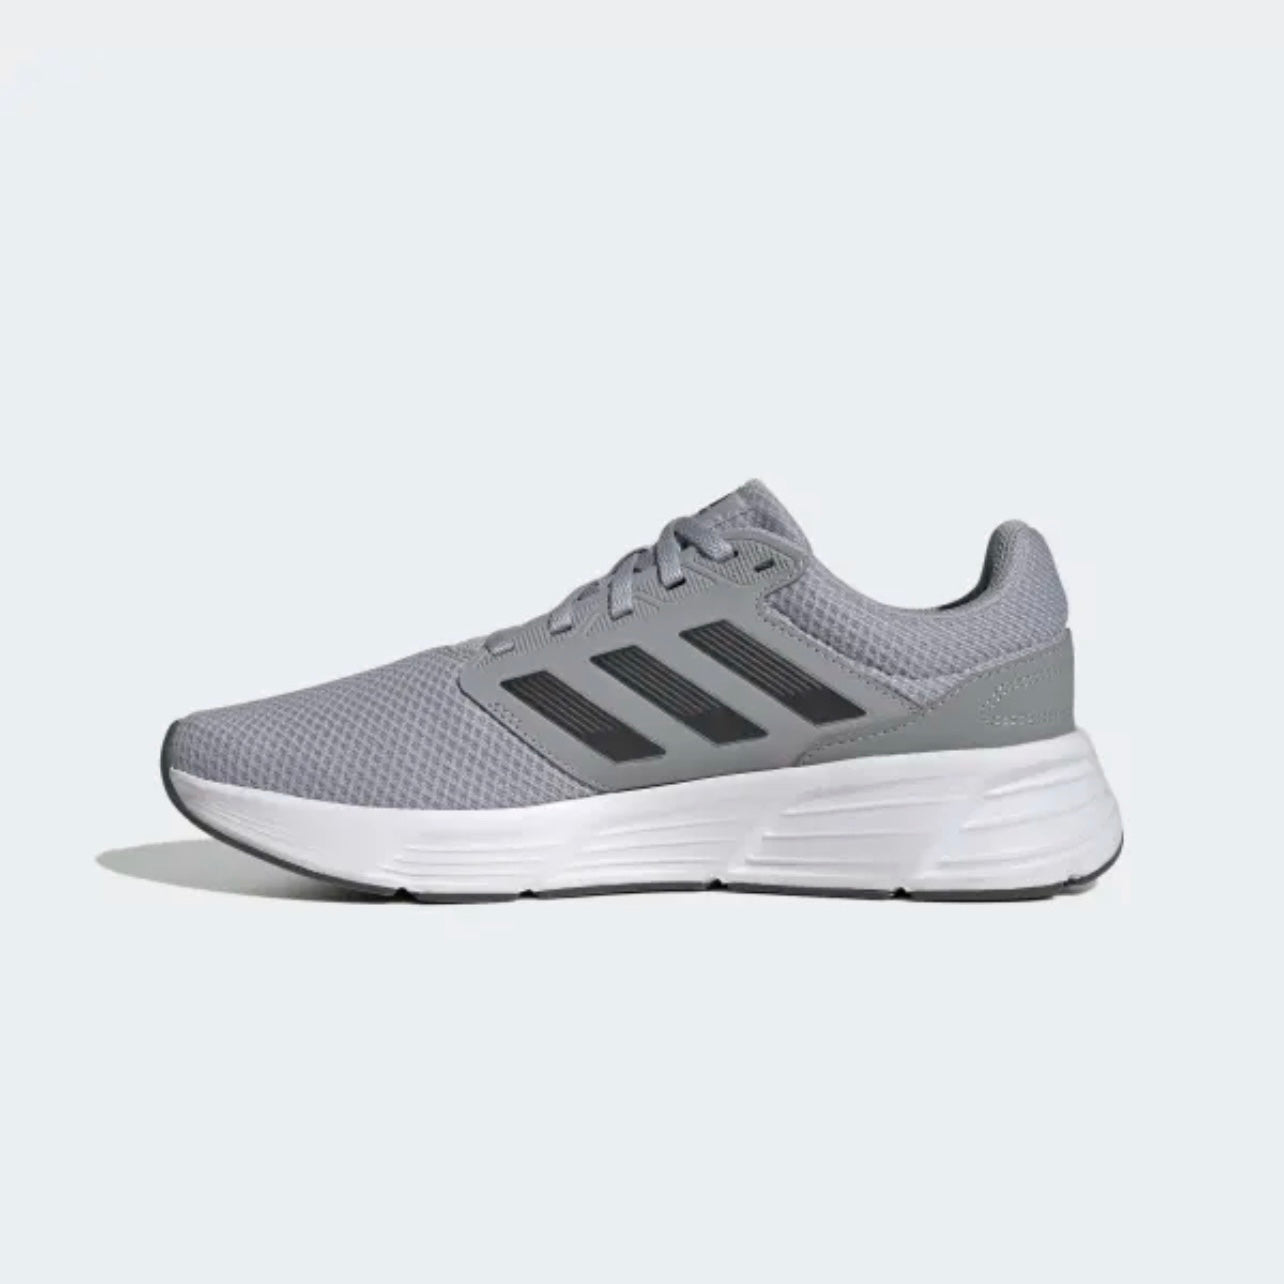 Adidas sneakers for men in Gray